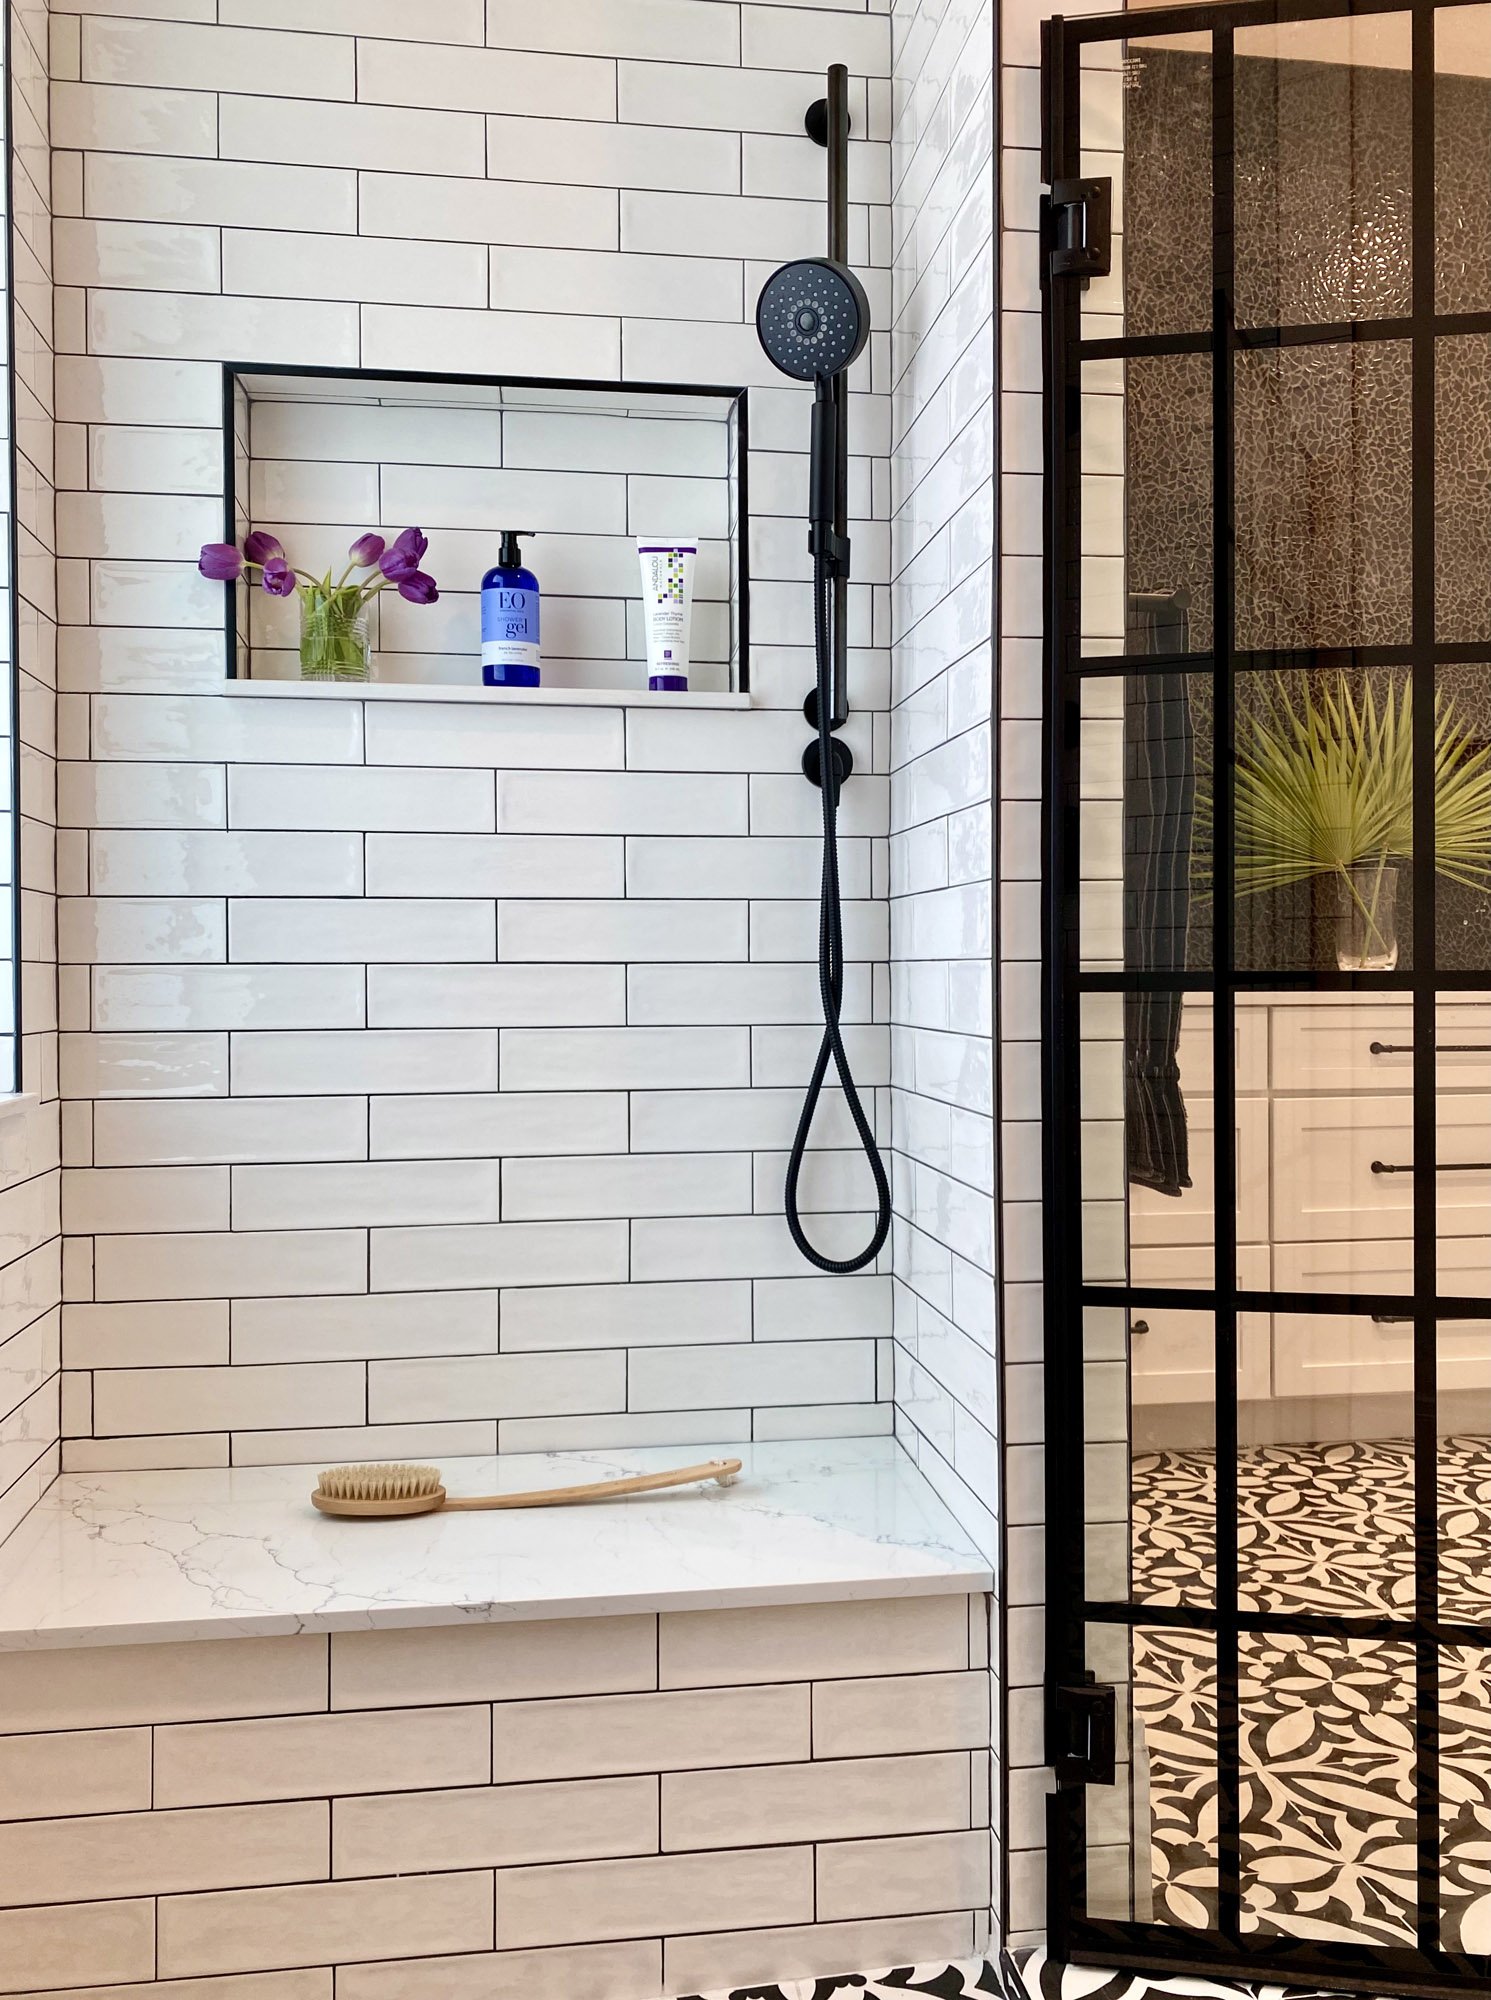 Wellington, Florida master bedroom shower room with white subway tile, built in bench, black shower head, black glass shower door. View into bathroom shows tile and custom vanity.